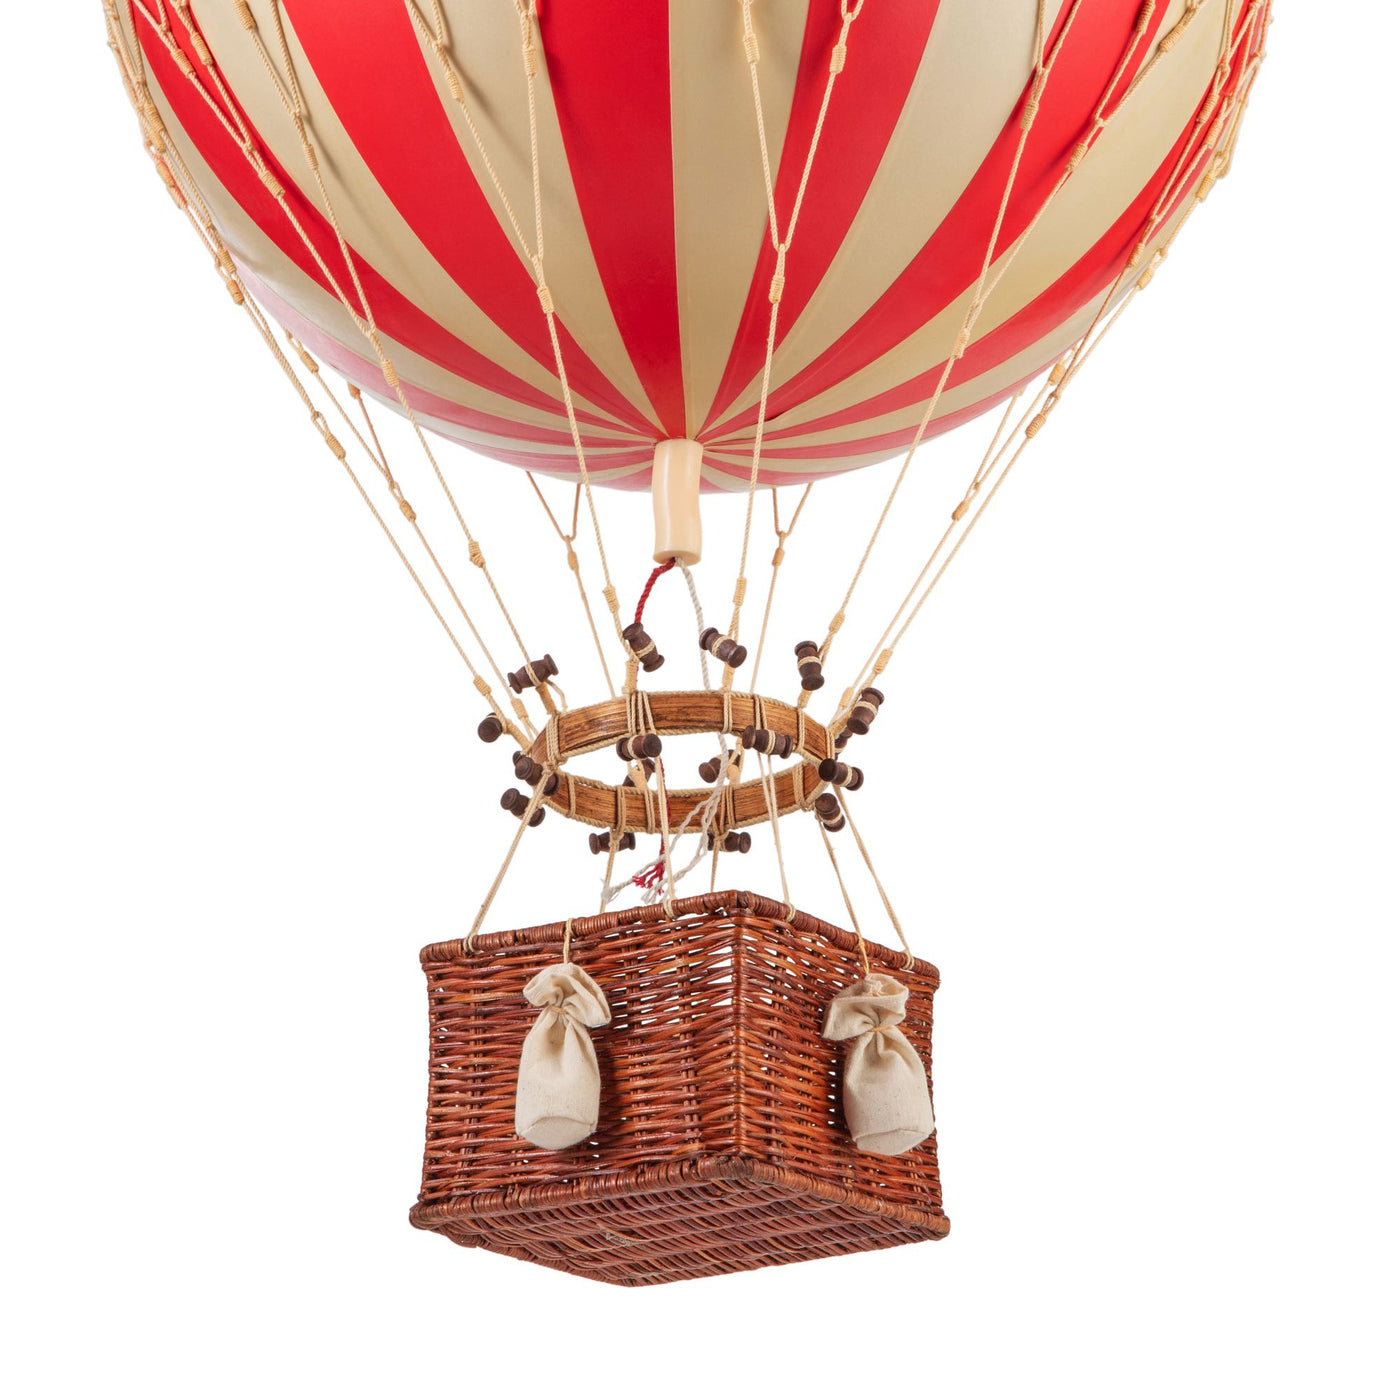 Luftballon True Red, 32 cm. Royal Aero, Authentic Models